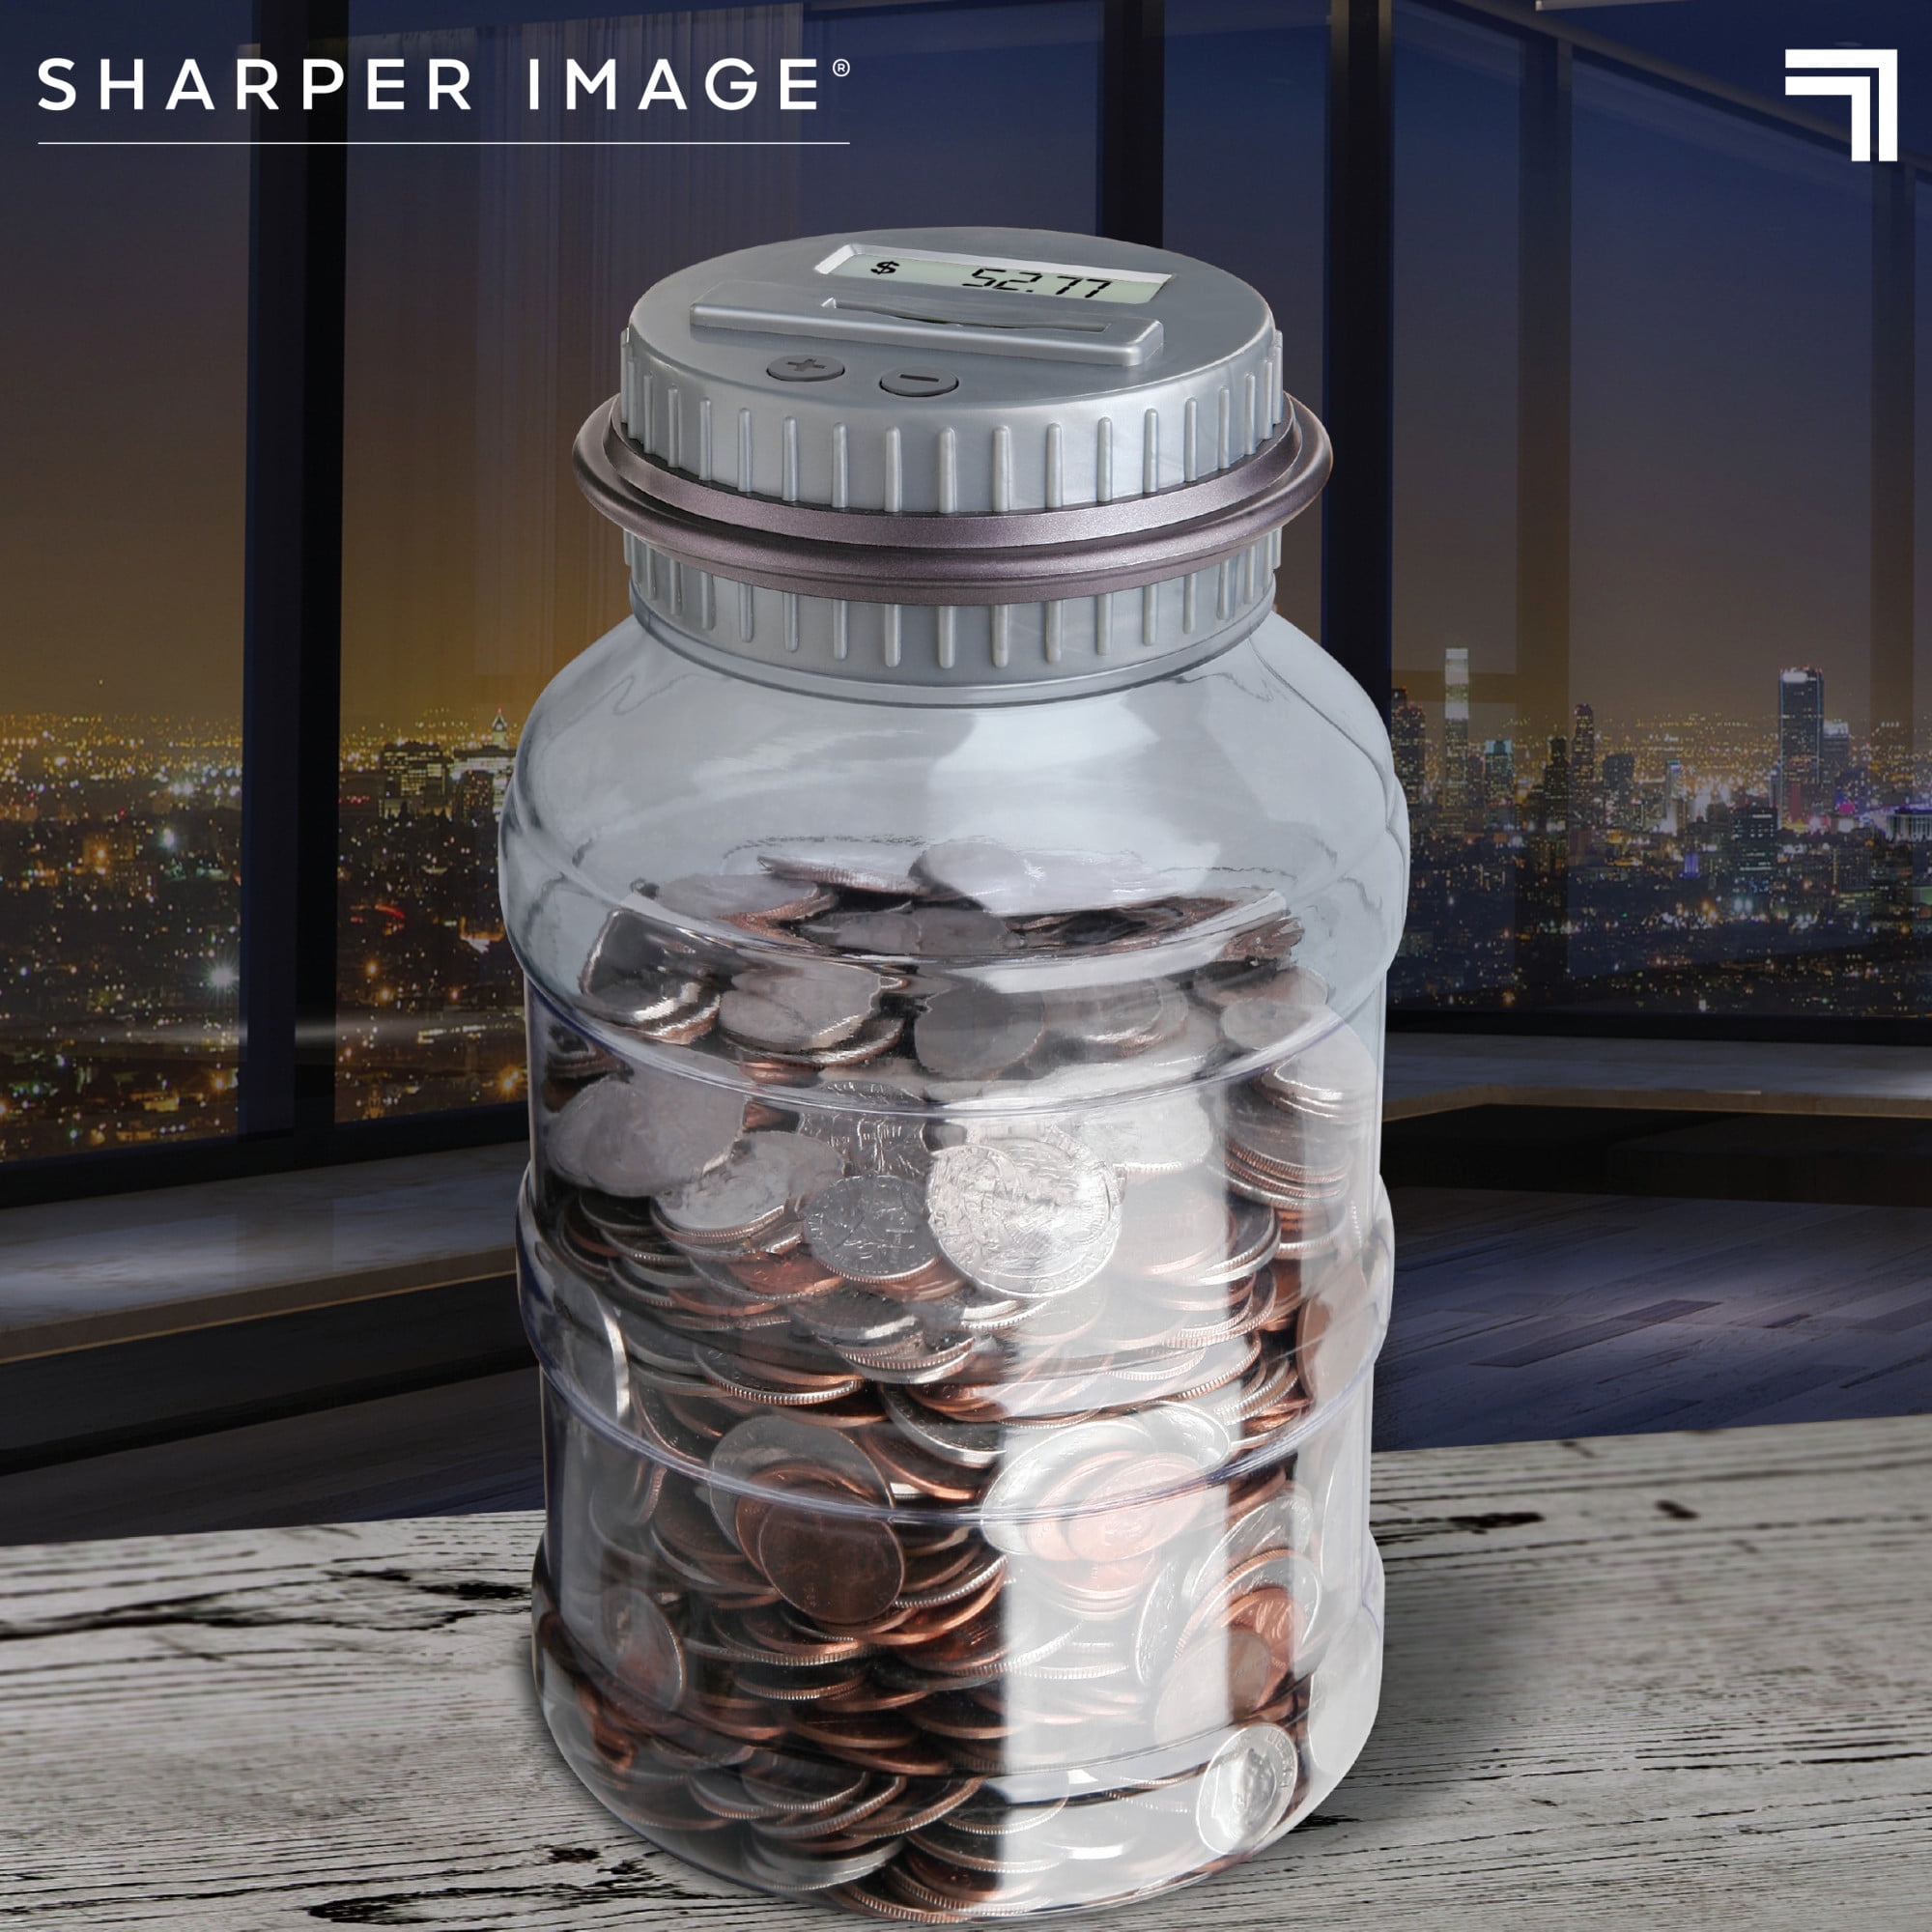 SHARPER IMAGE DIGITAL COUNTING MONEY JAR PIGGY BANK LCD RED LID NEW 